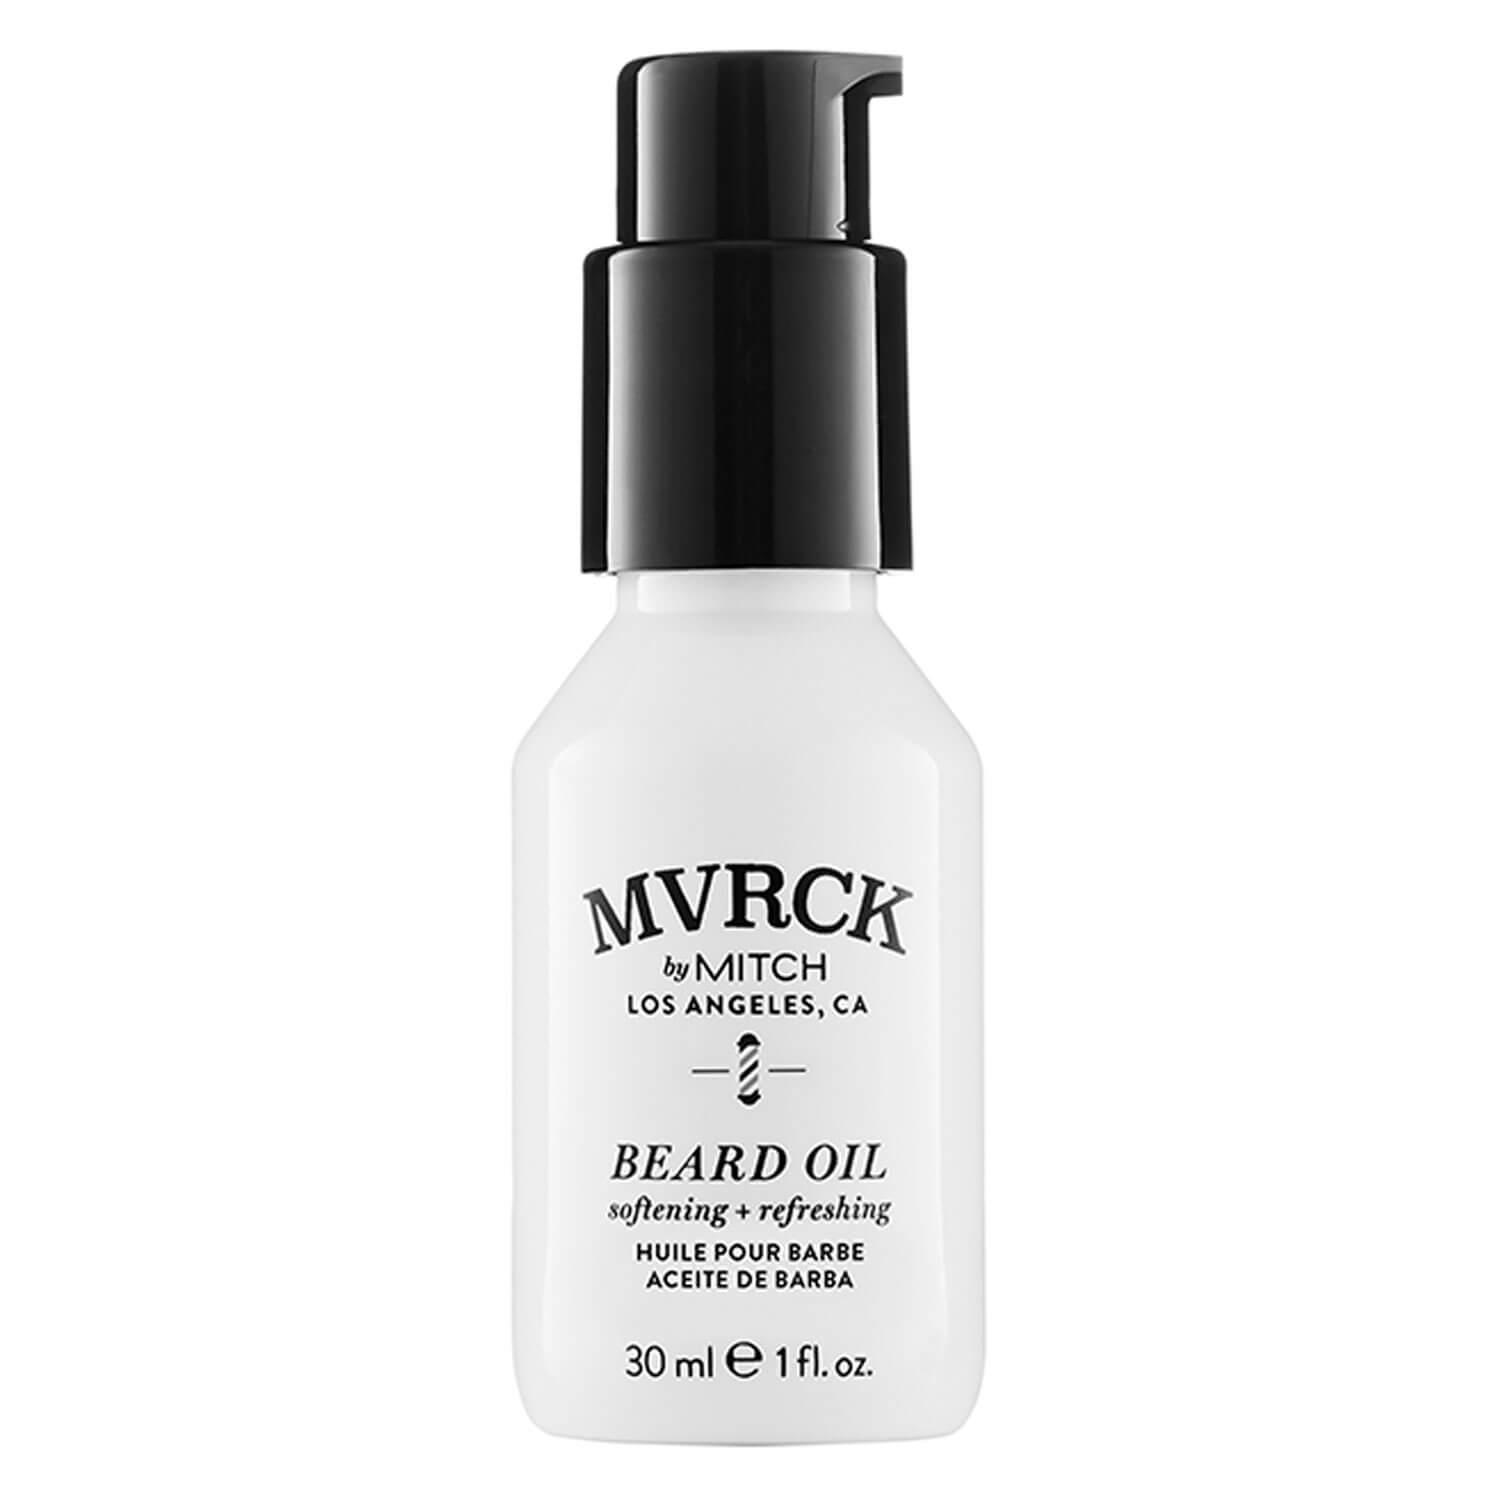 MVRCK - Beard Oil